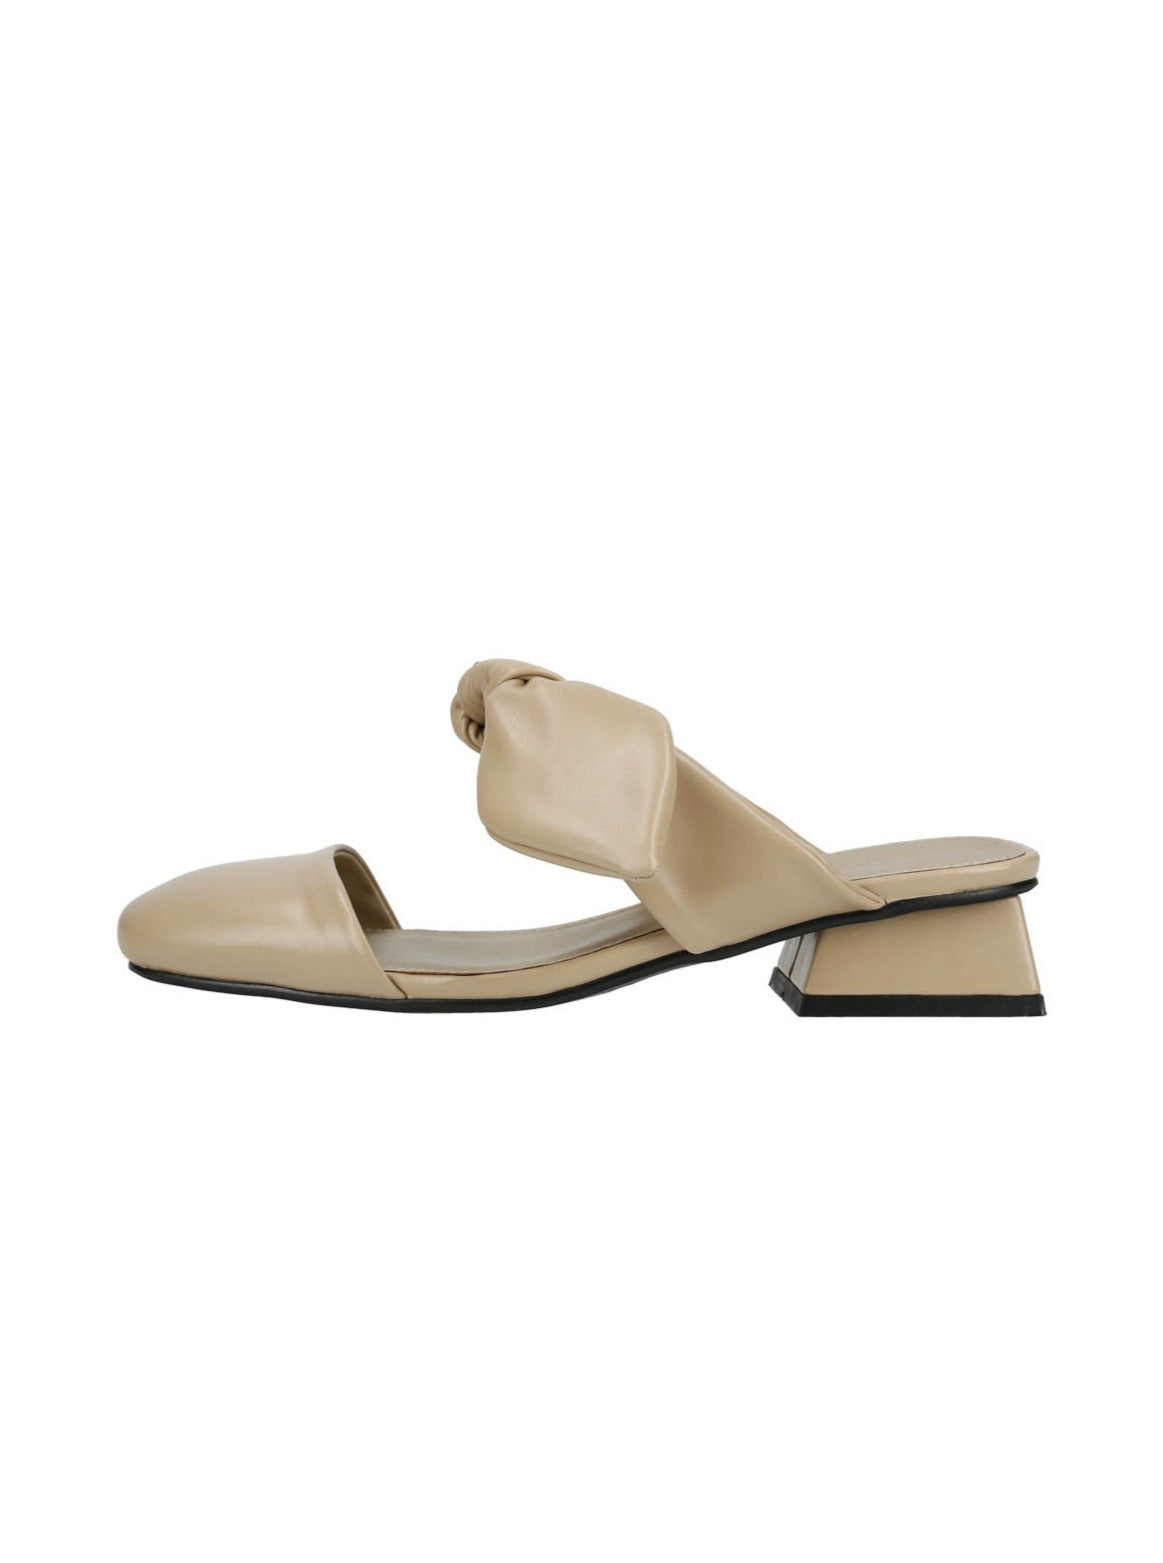 Cla ribbon sandal – ClaSTEllaR